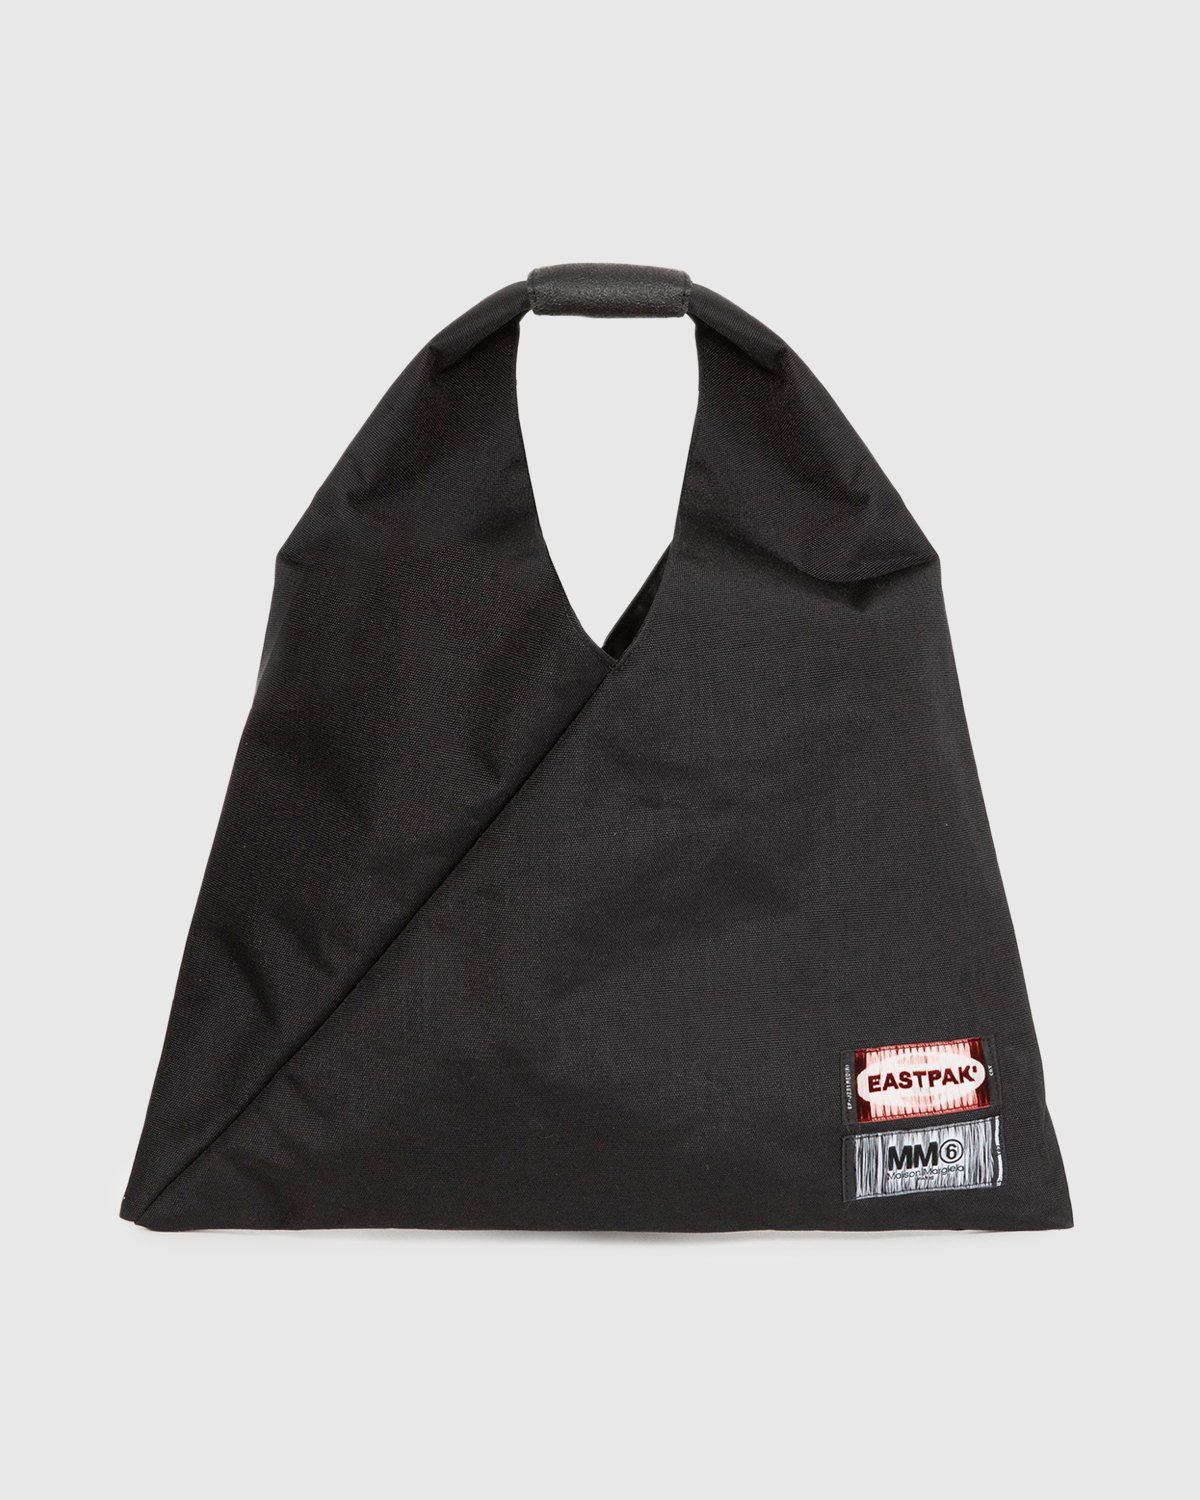 MM6 Maison Margiela x Eastpak – Shopping Bag Black - Bags - Black - Image 1